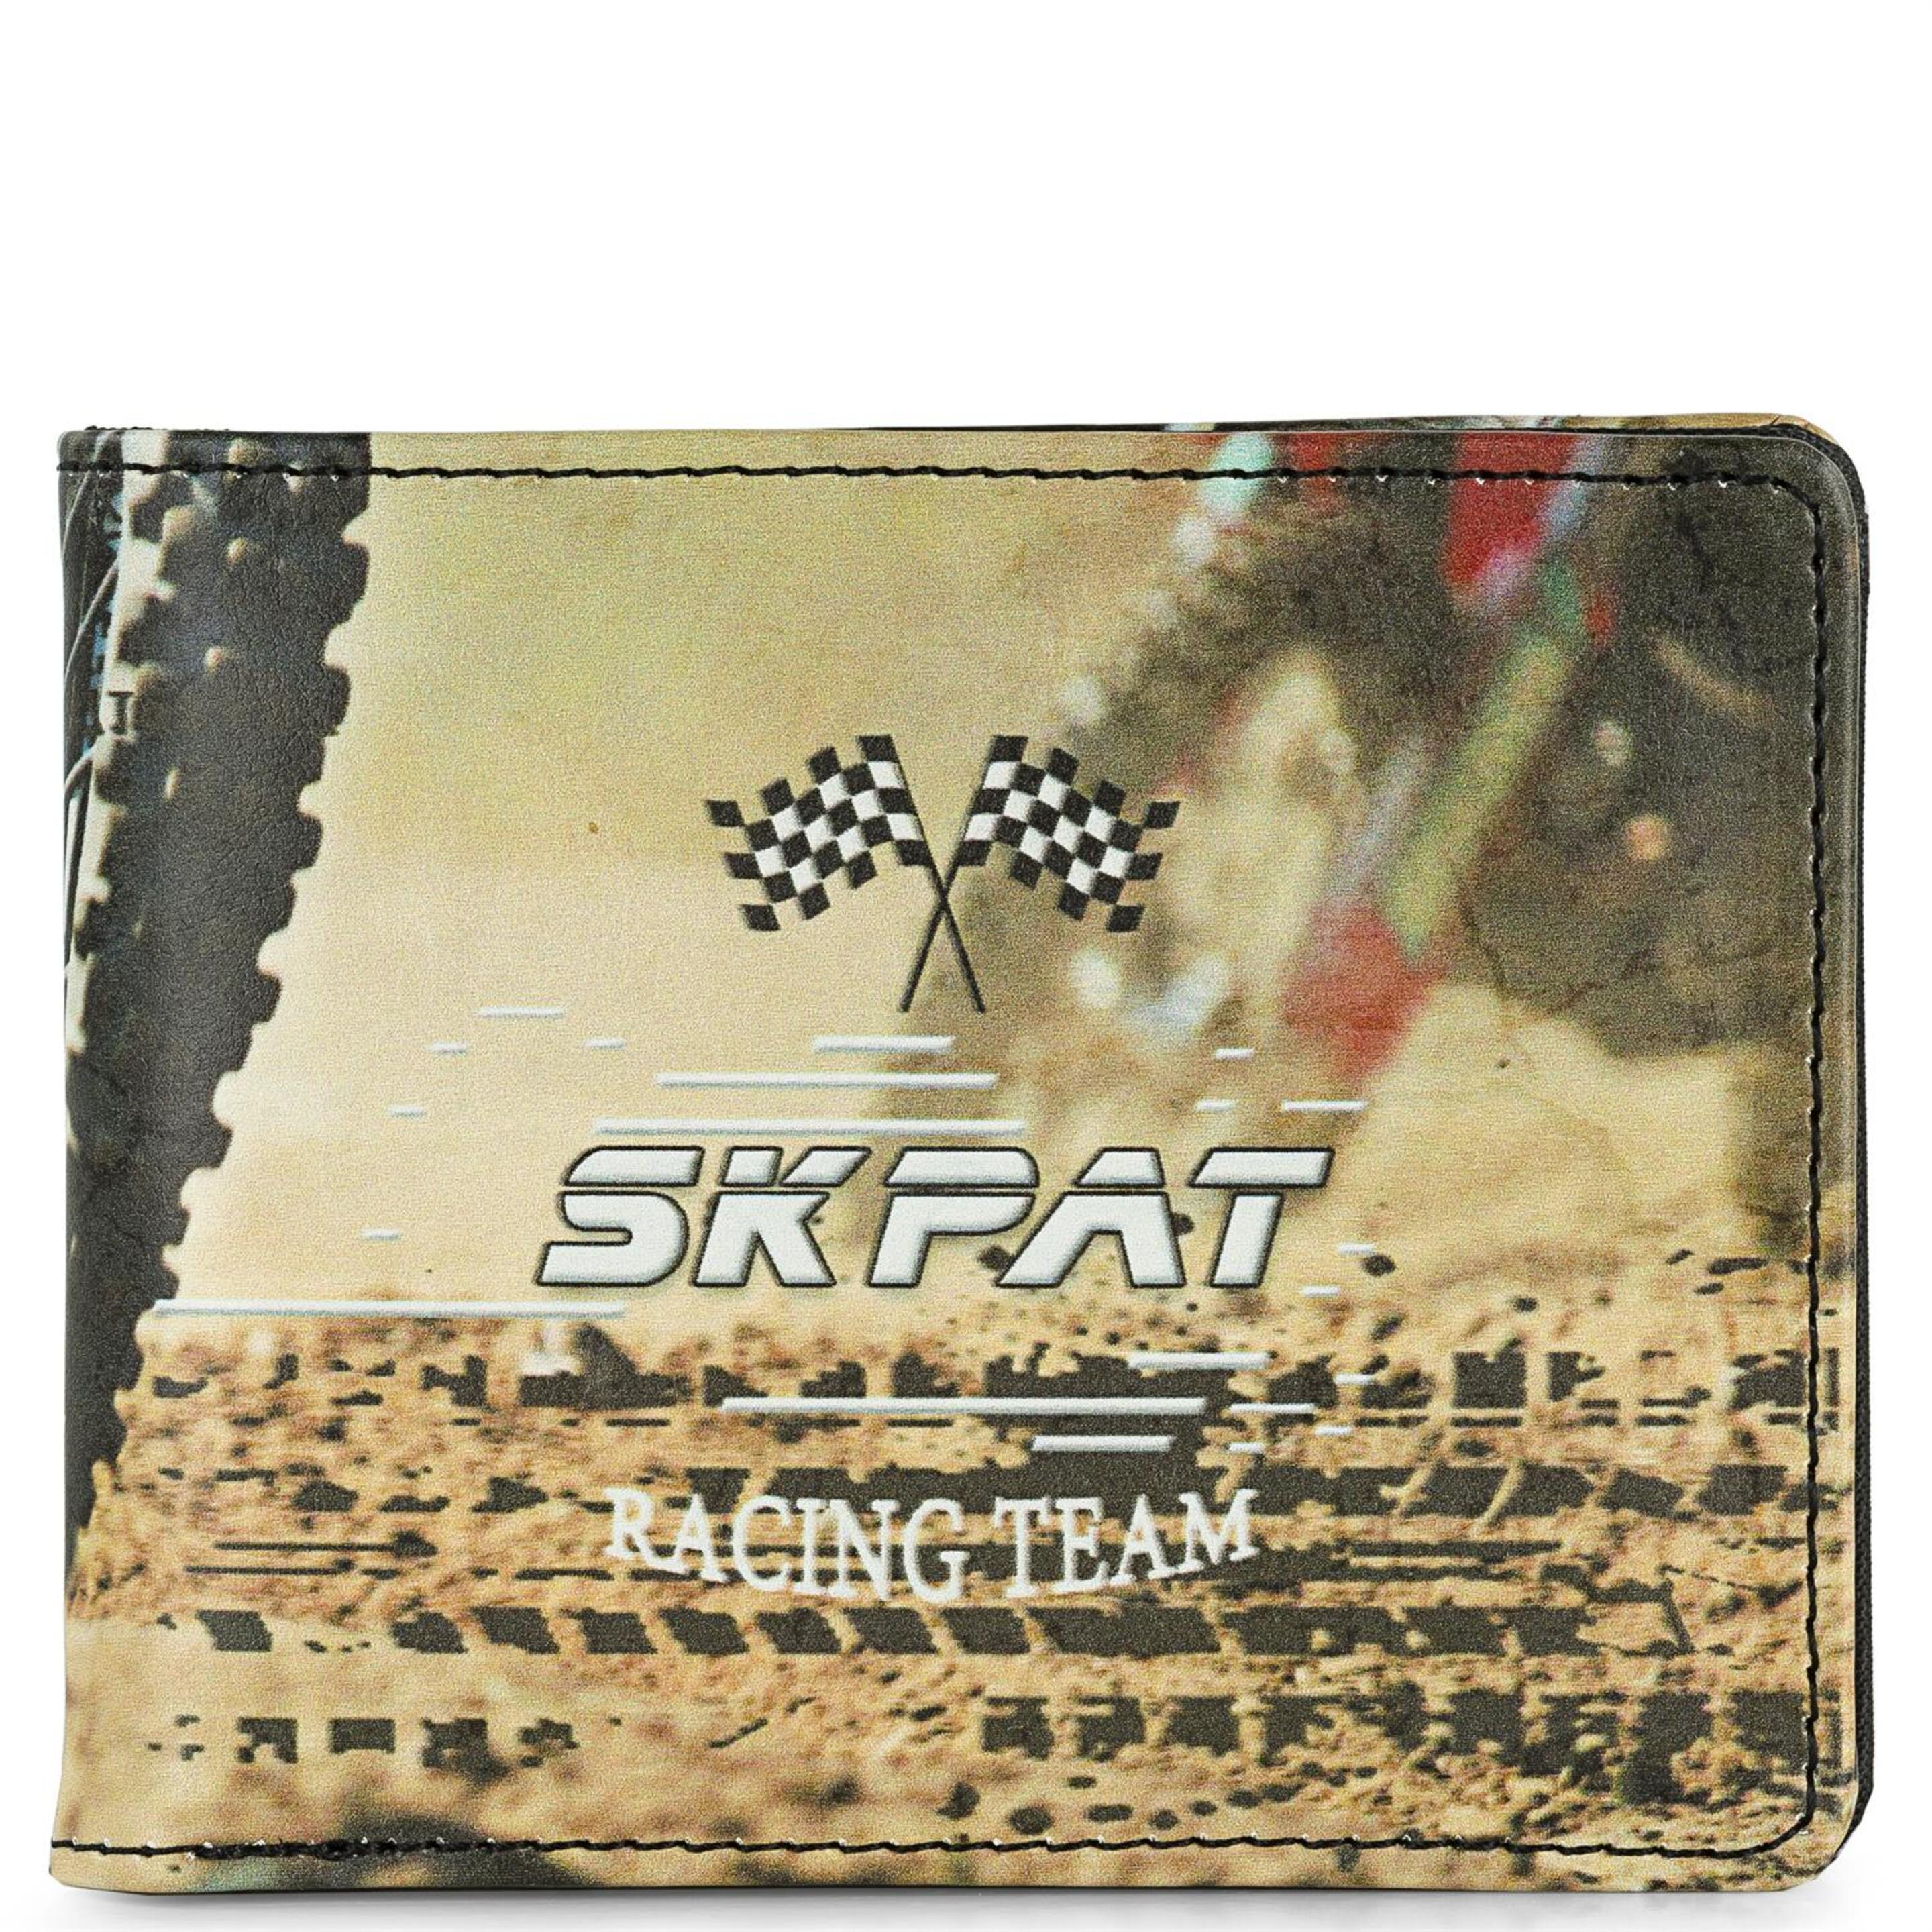 Cartera Skpat Racing Team - Multicolor  MKP